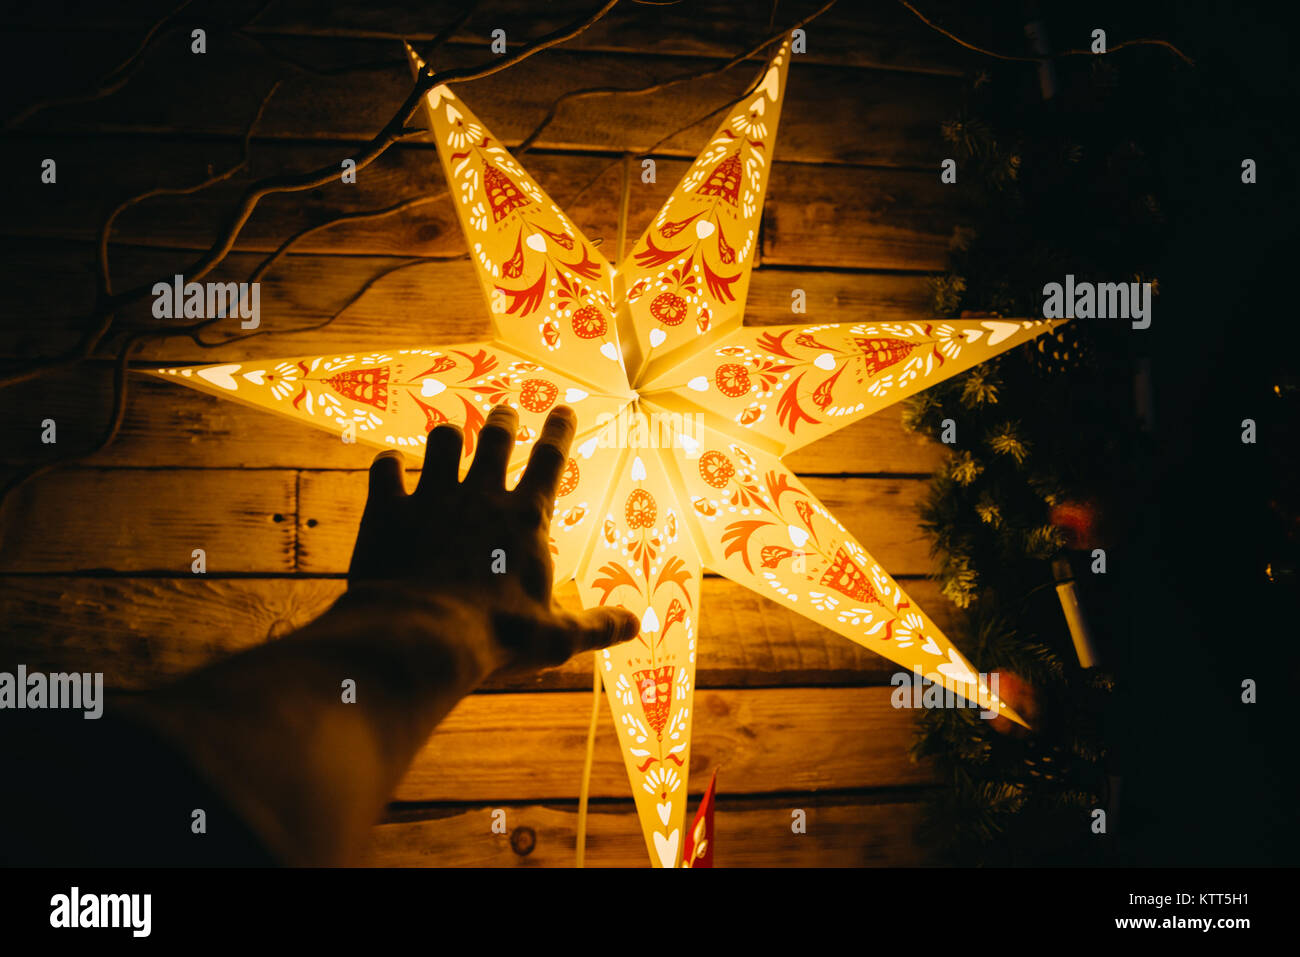 Human hand reaching for an illuminated star Stock Photo